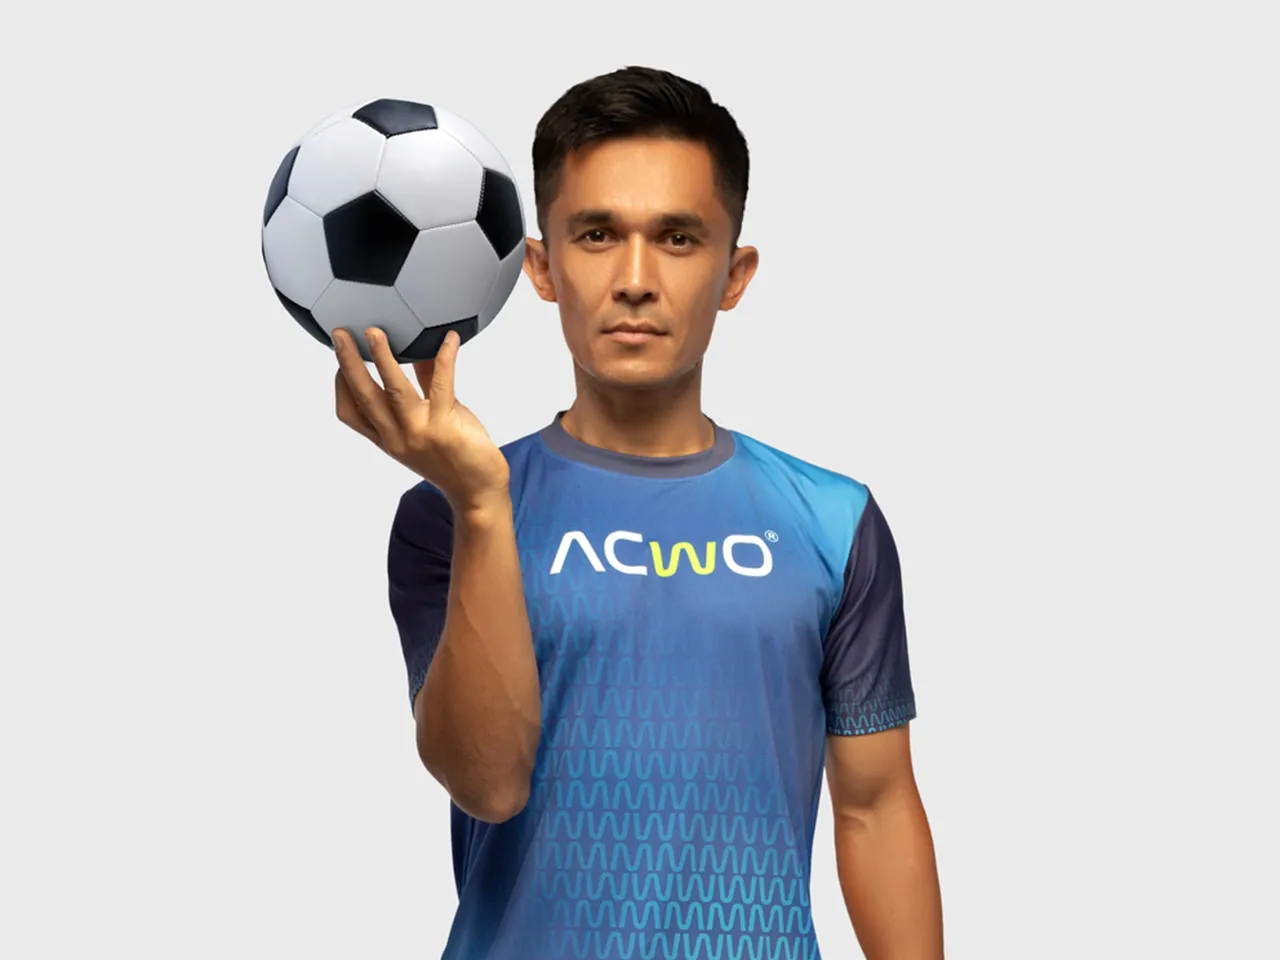 ACwO and India’s football team captain Sunil Chhetri join forces